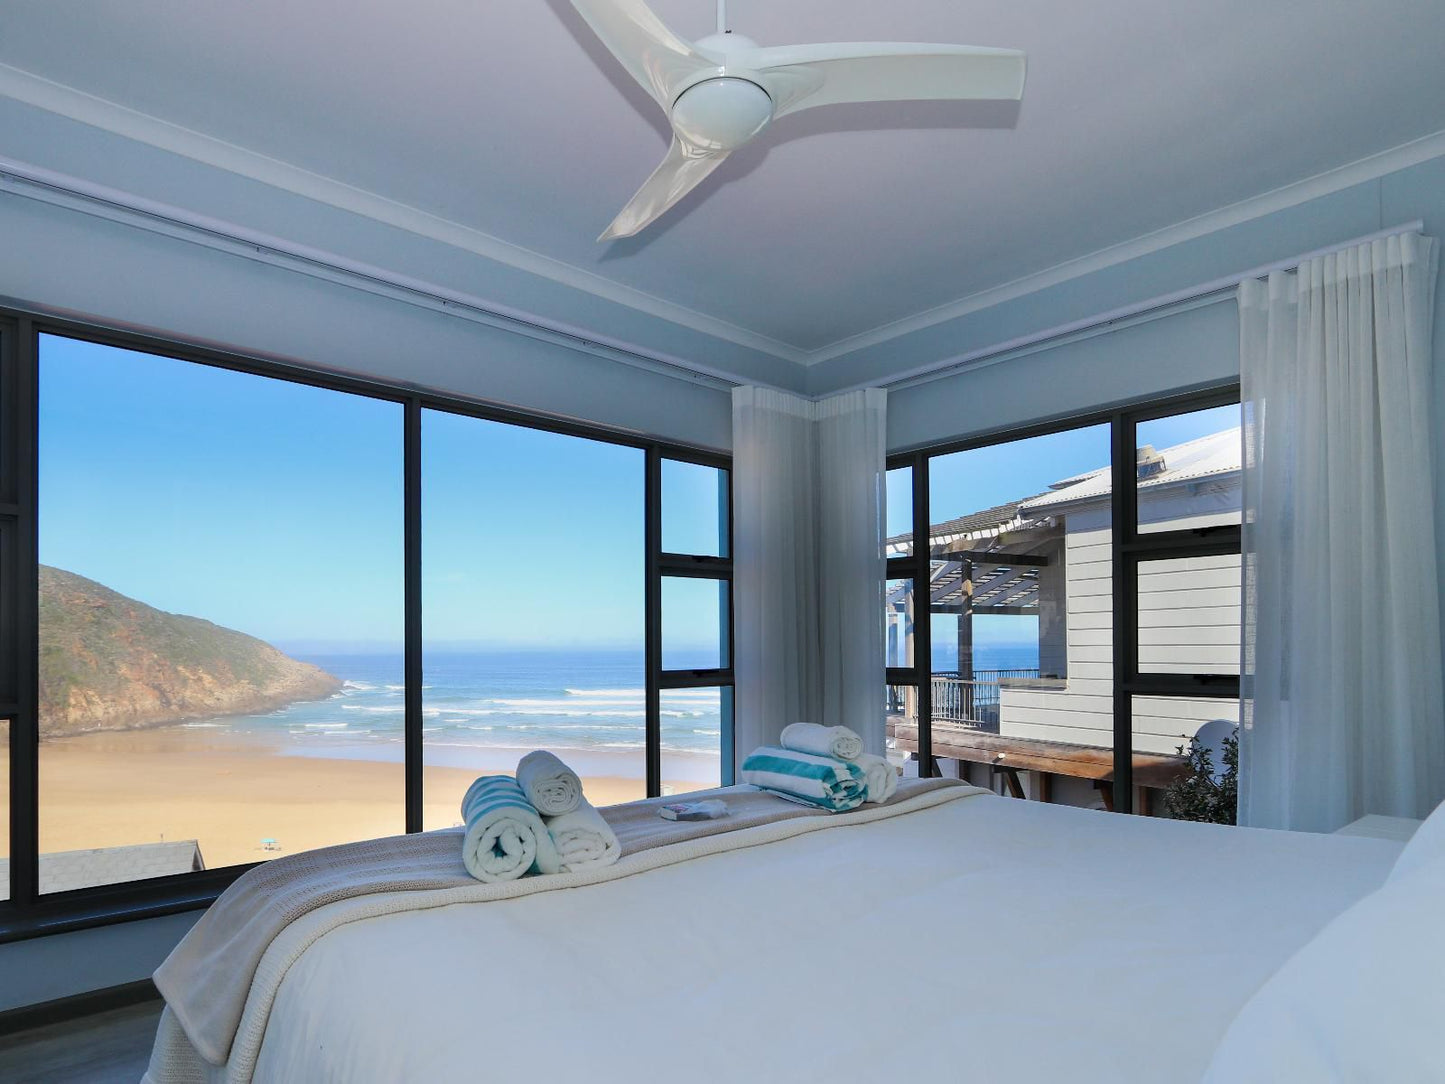 C Flat Herolds Bay Western Cape South Africa Bedroom